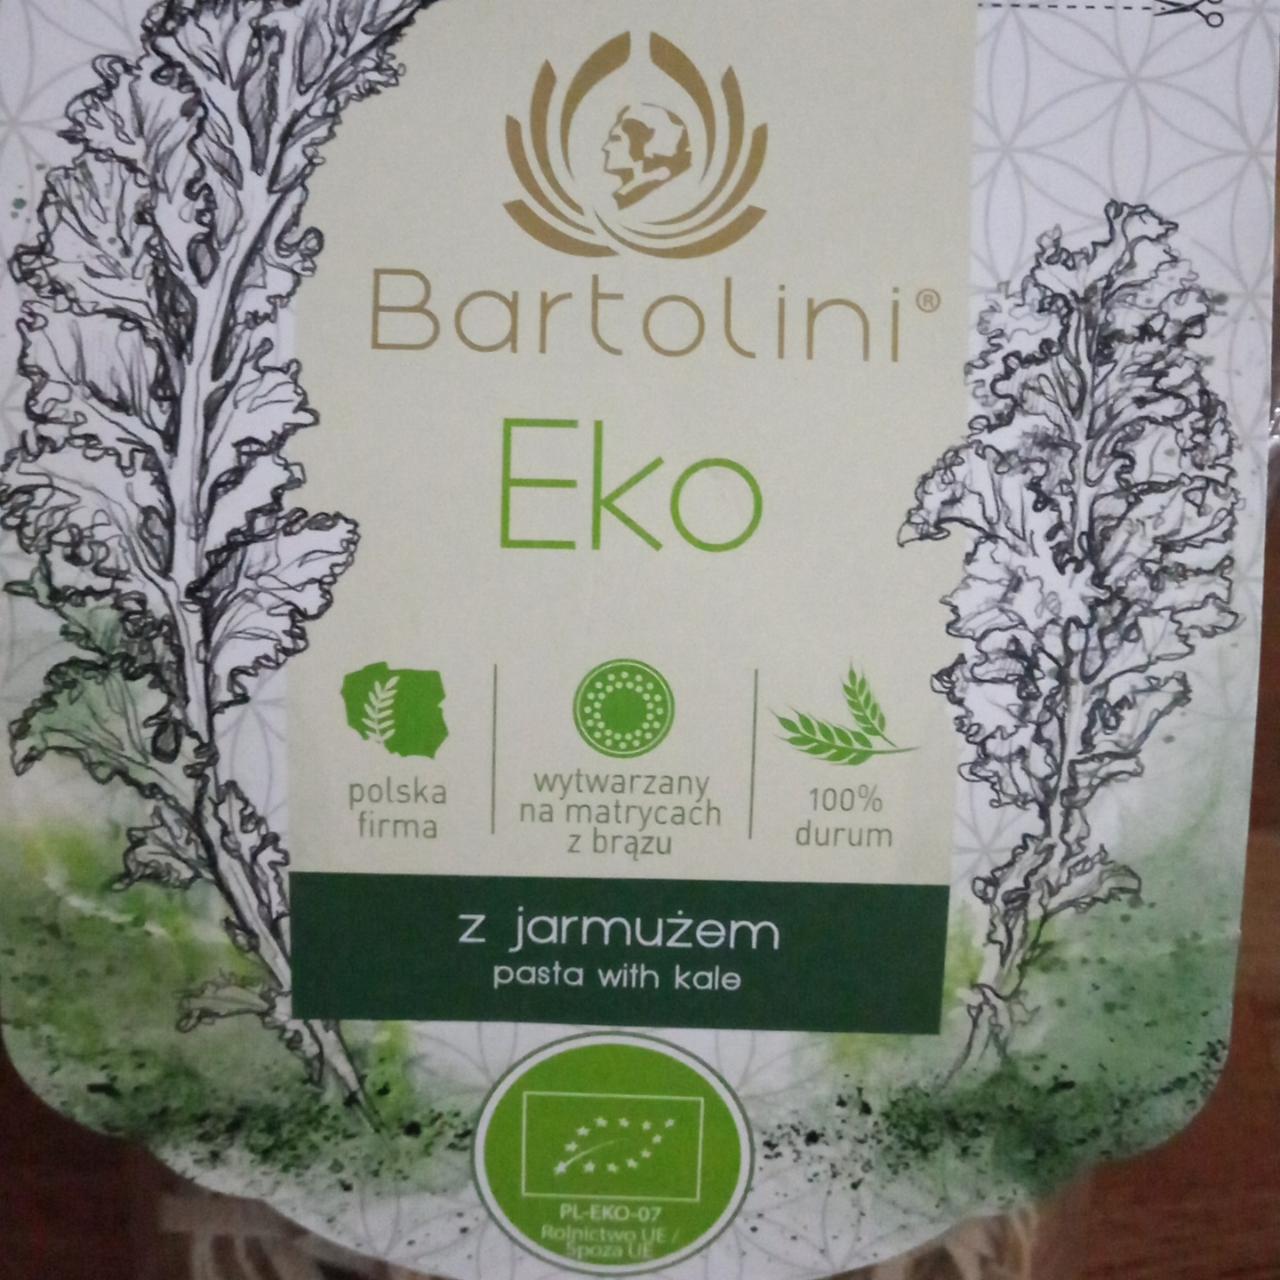 Фото - макароны с зеленью лапша Eko Bartolini